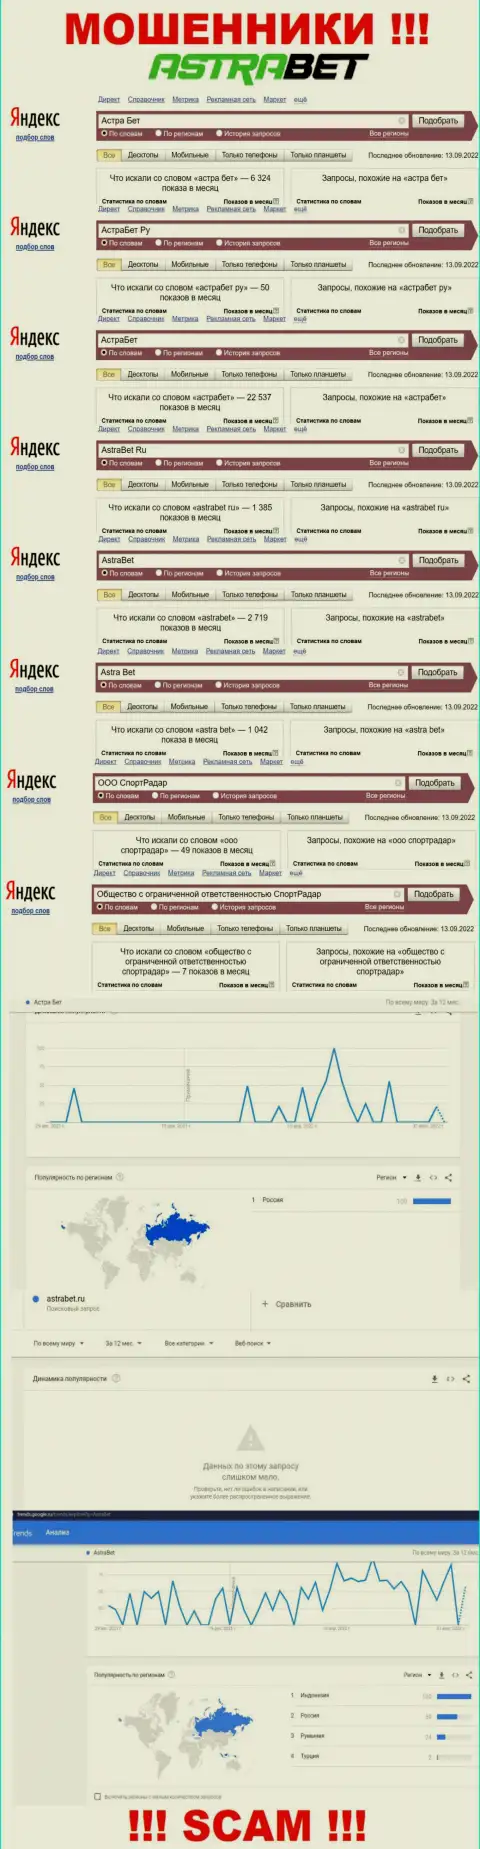 Аналитика онлайн-запросов по разводилам АстраБет Ру в сети Интернет